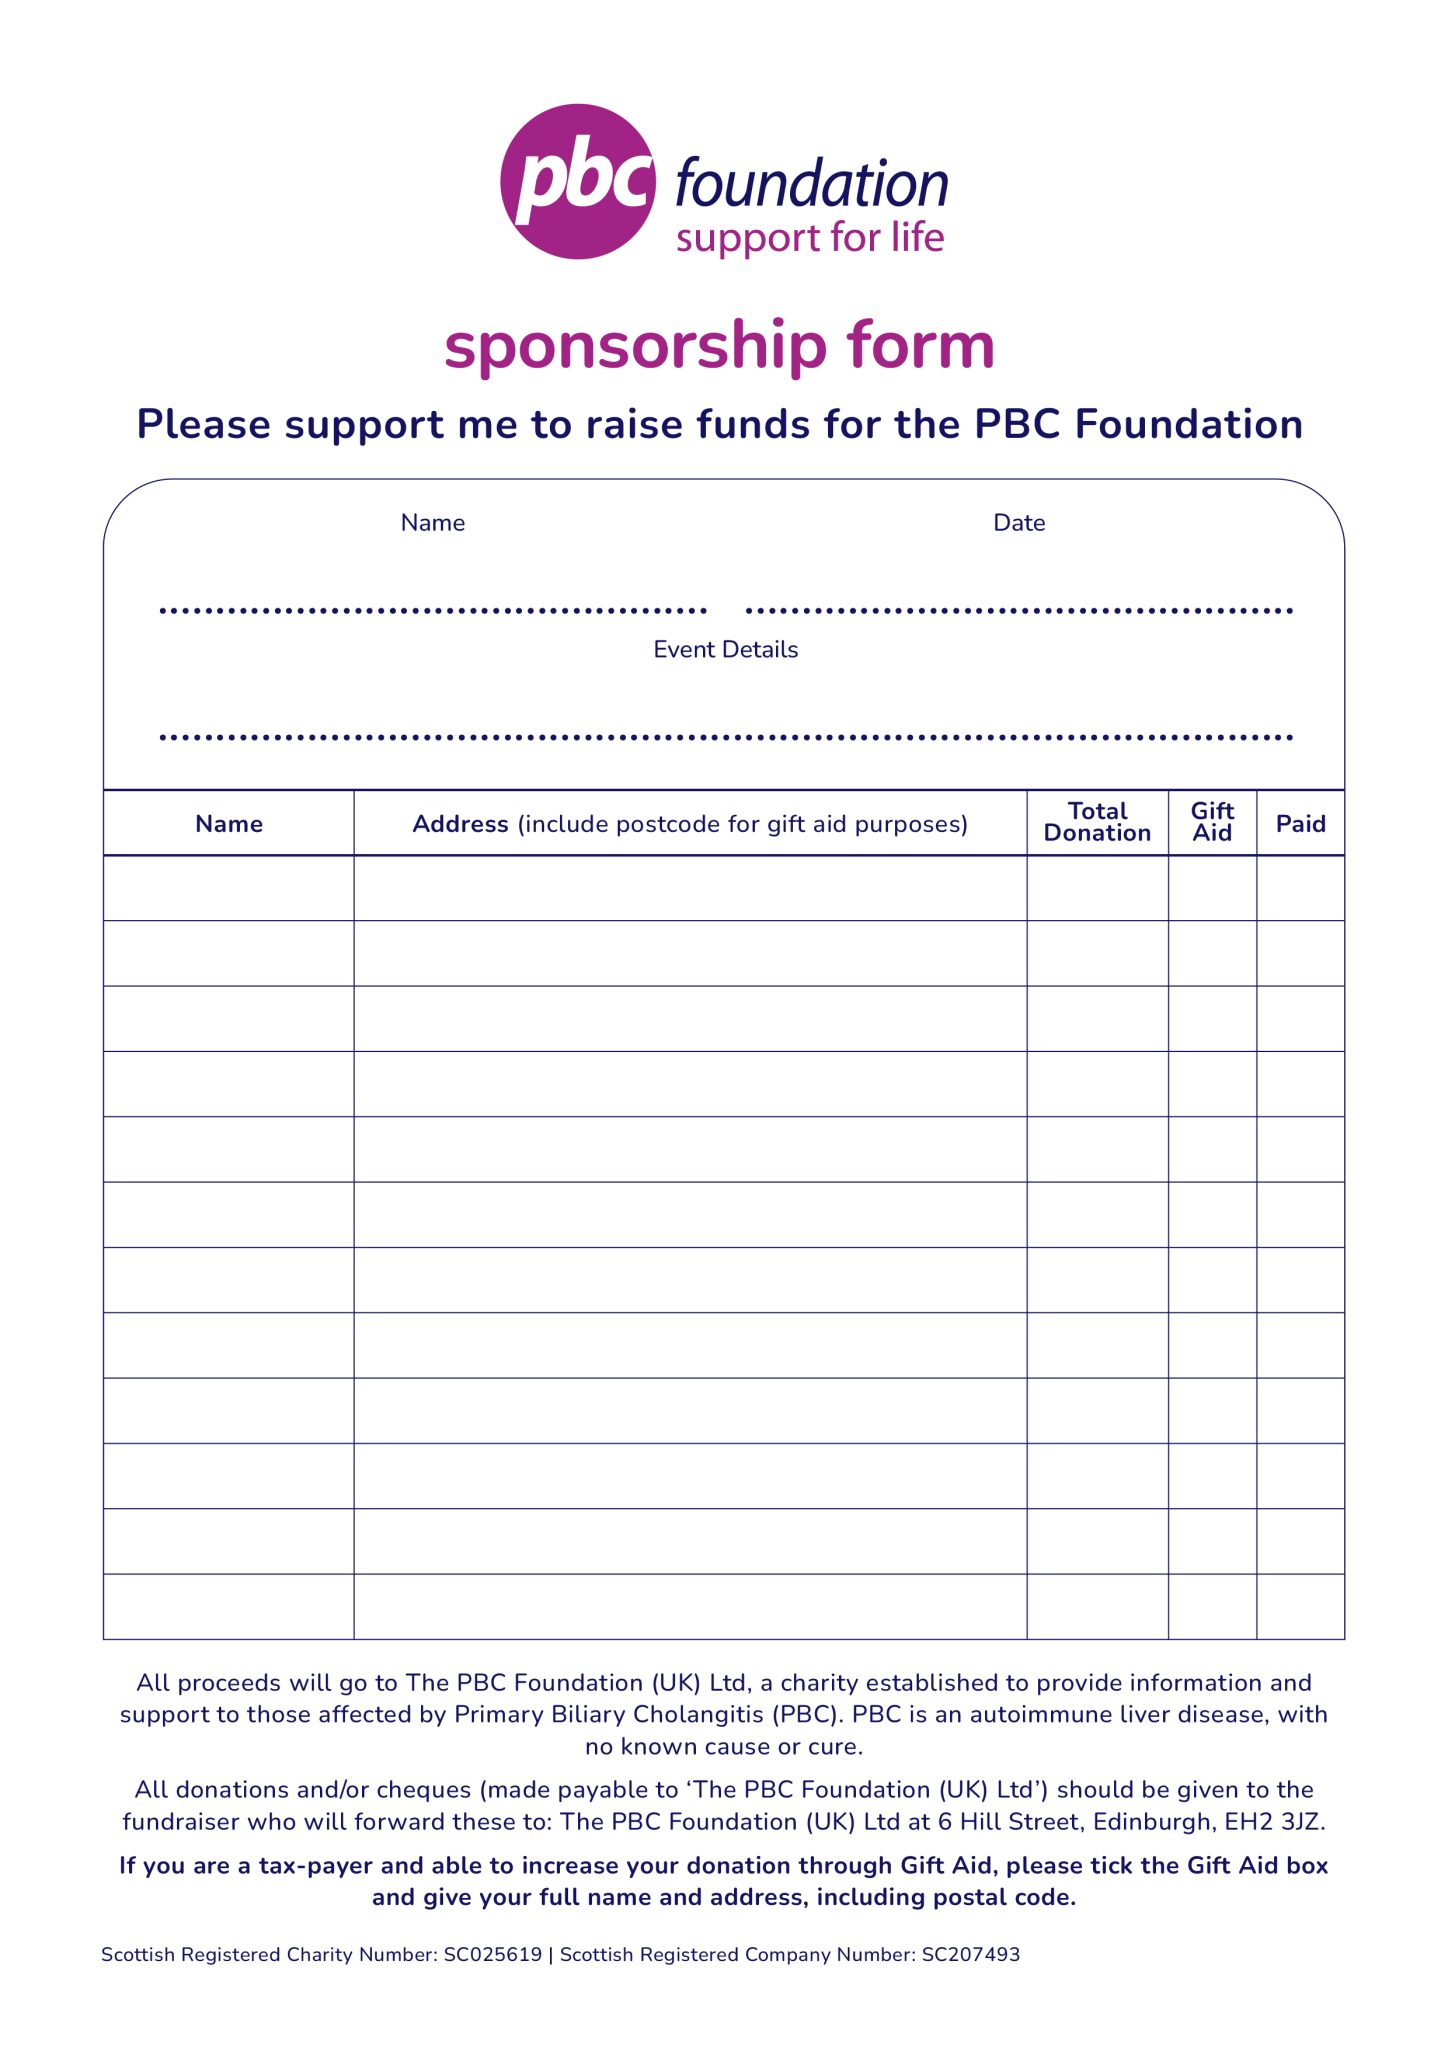 A sponsorship form